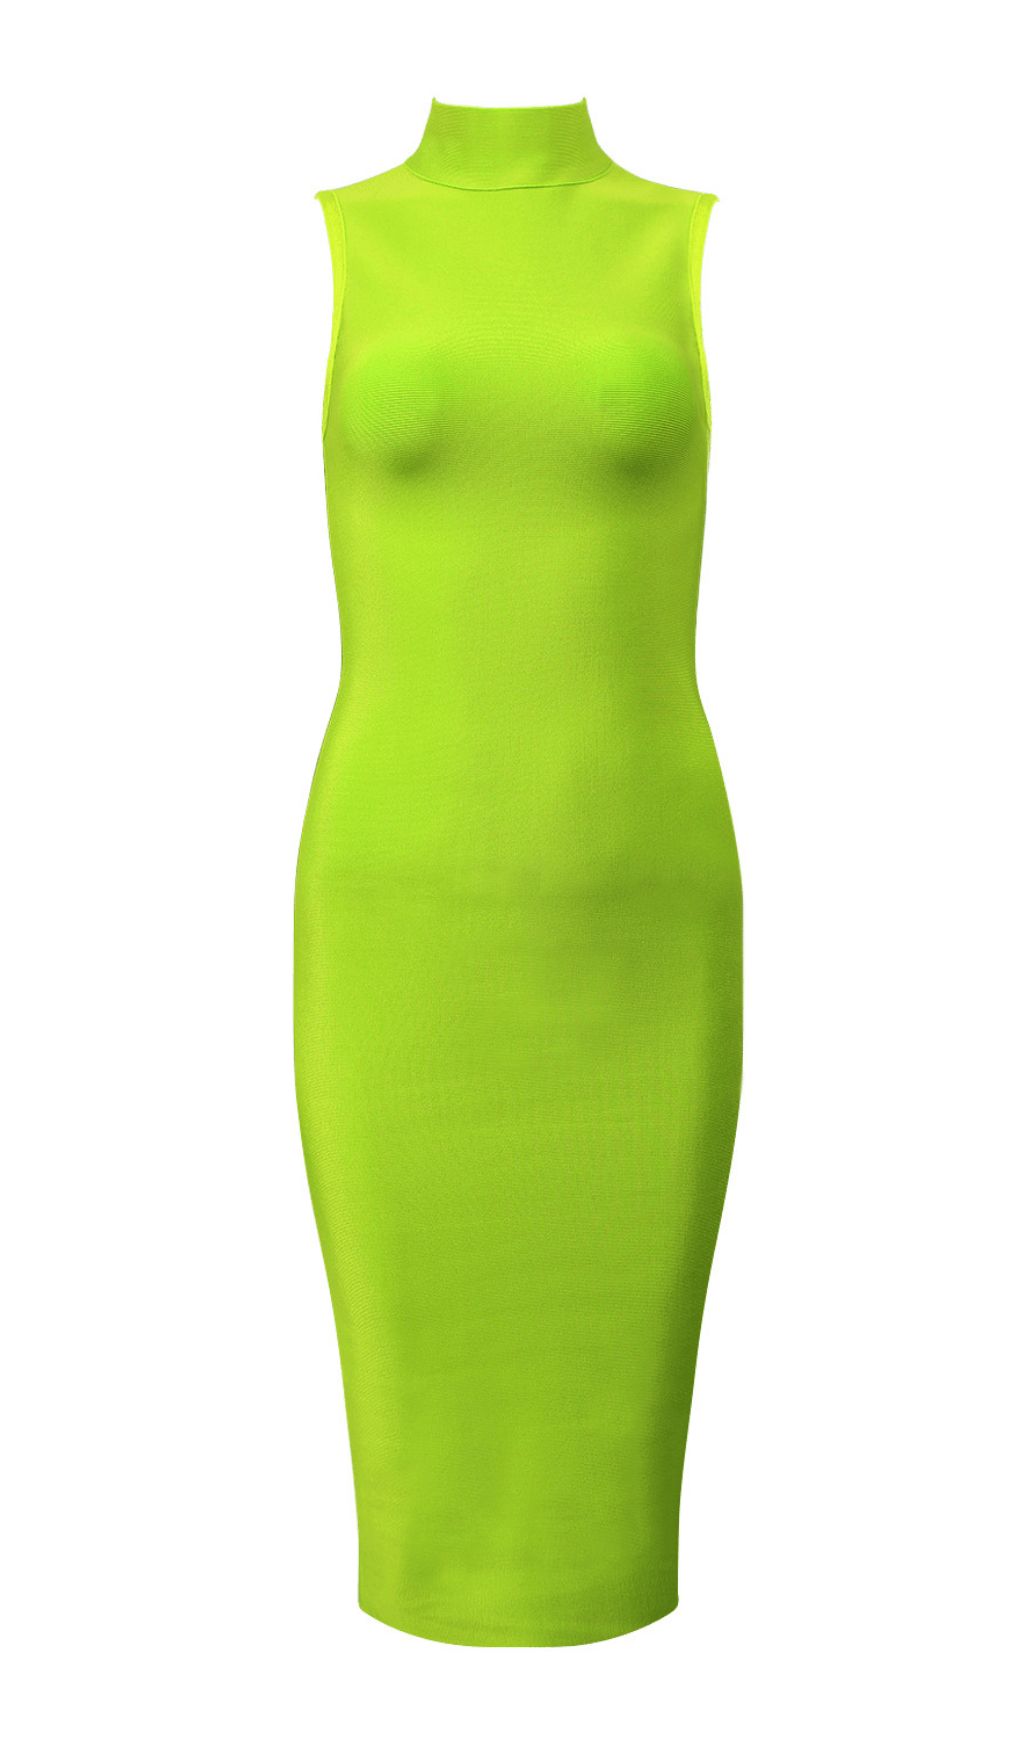 FLUORESCENT GREEN BANDAGE DRESS